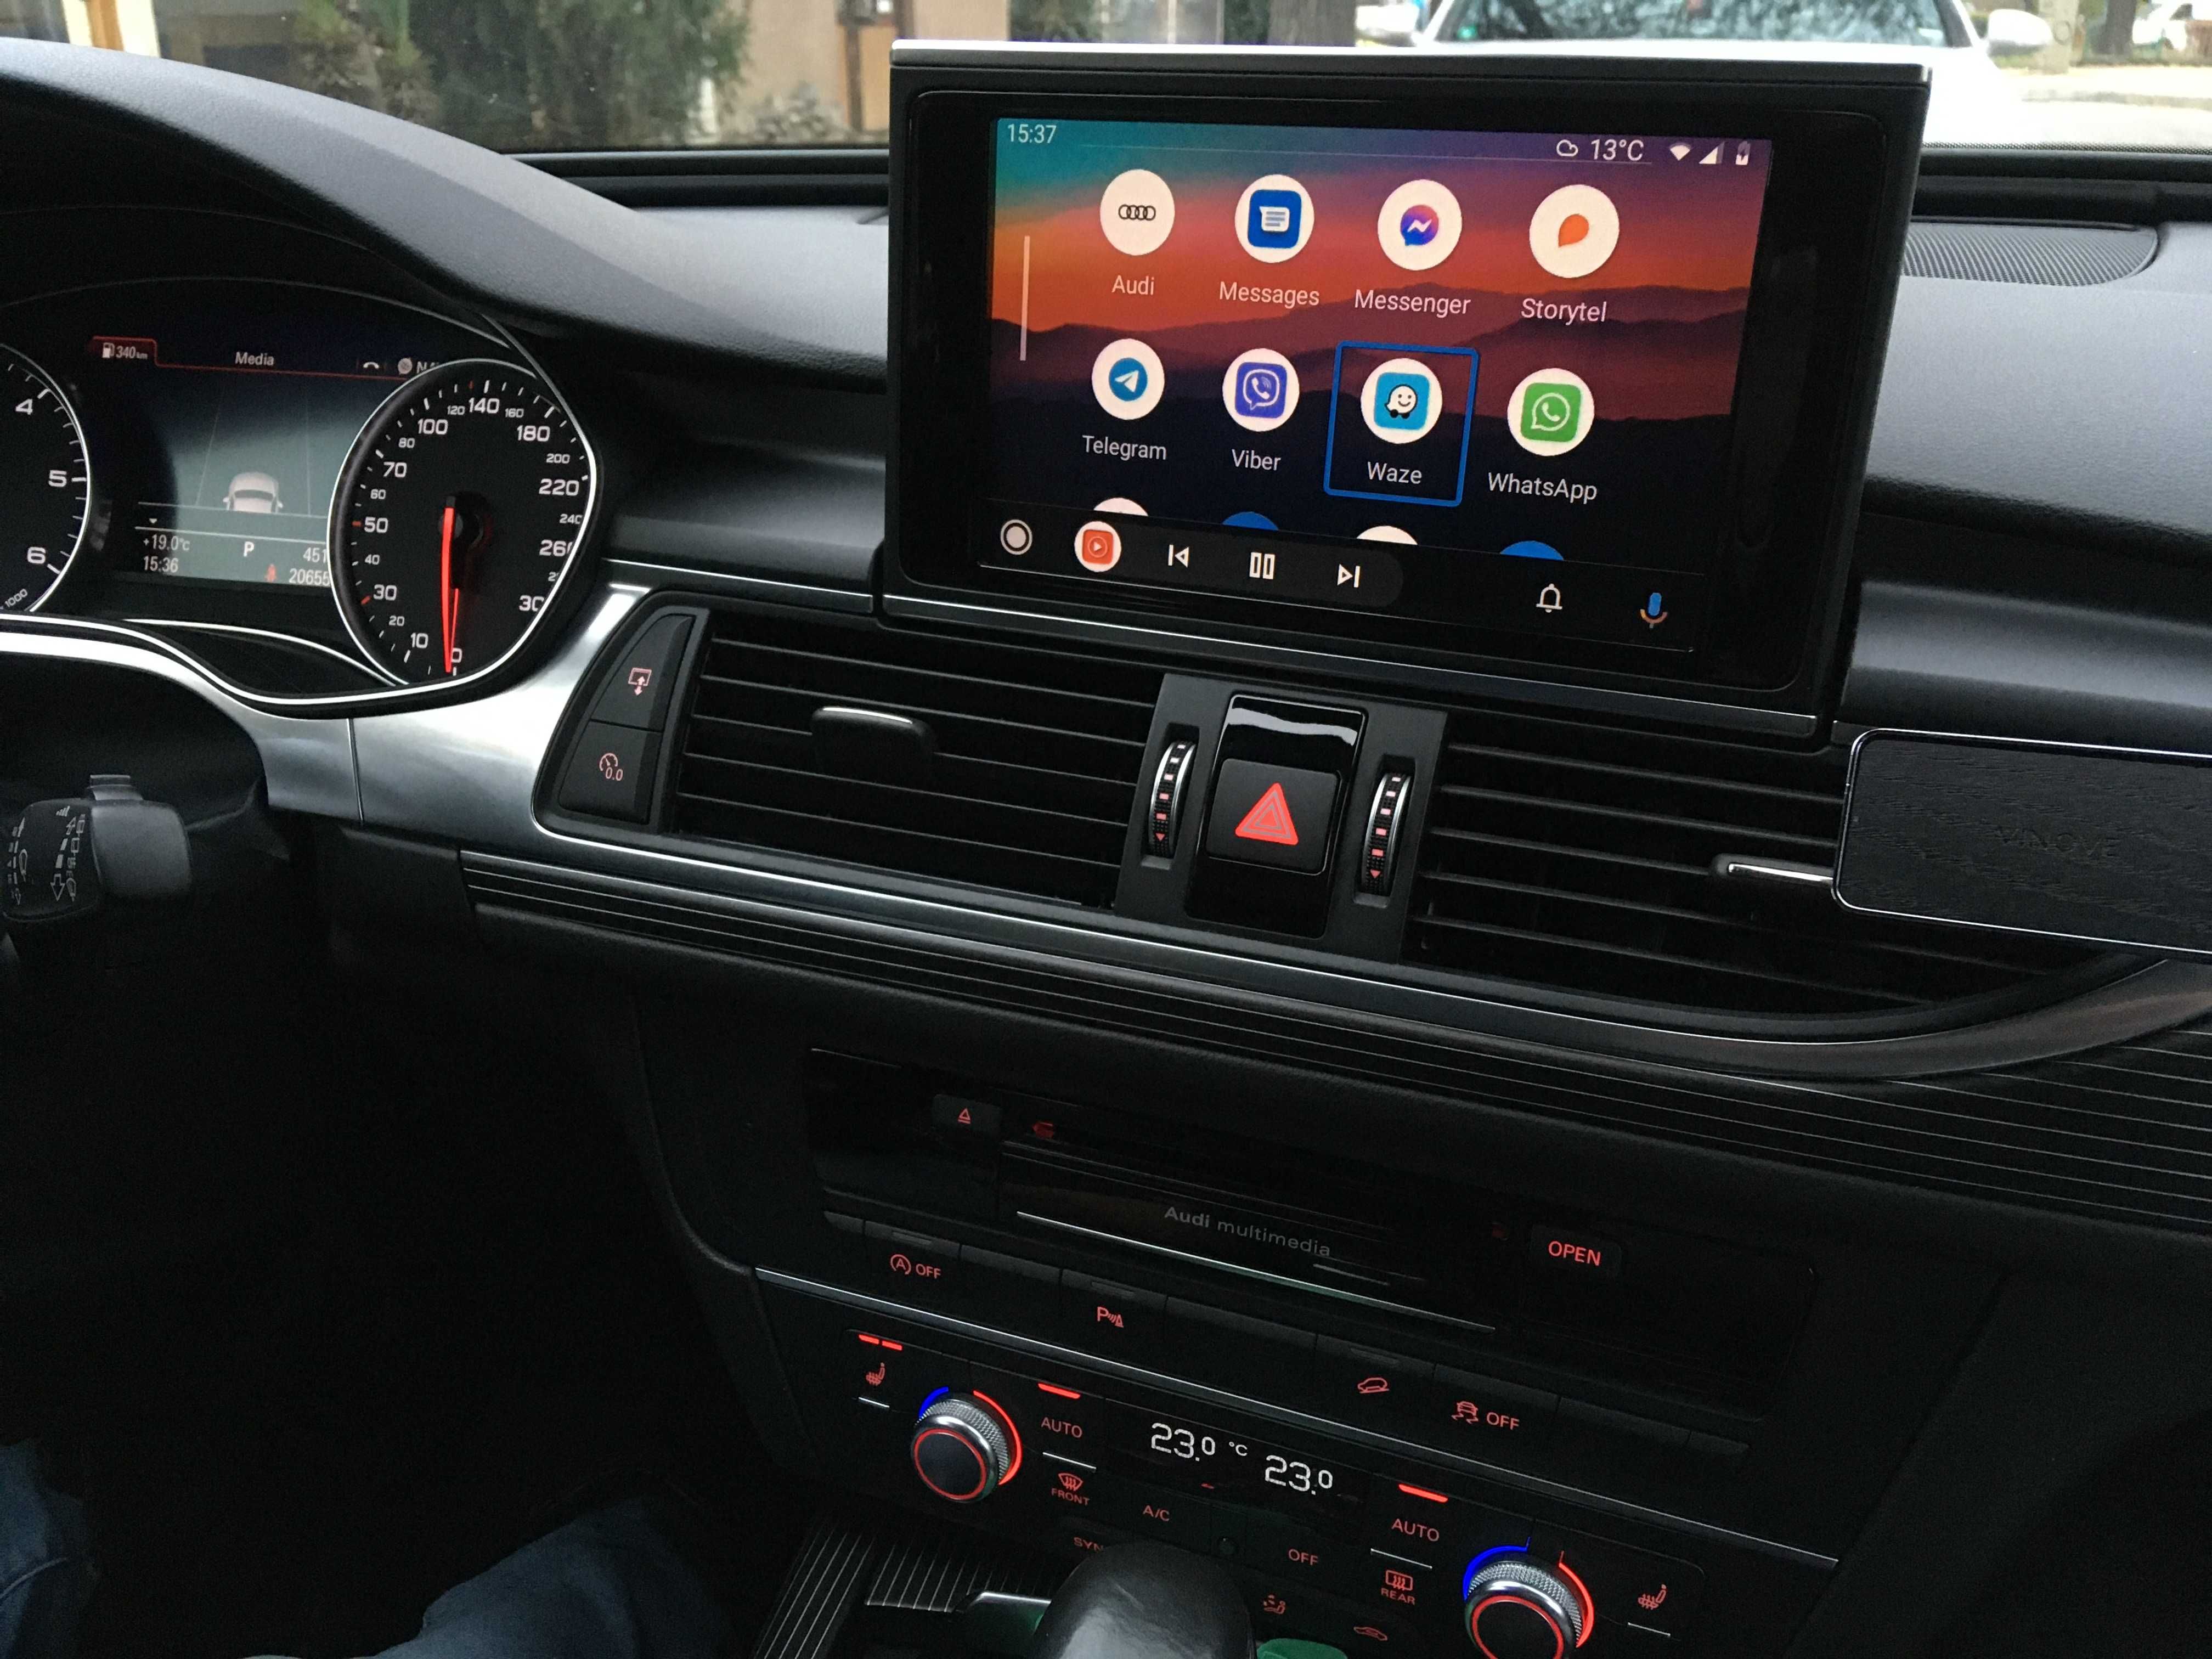 Audi MIB България Apple CarPlay Android Auto ViM Speed Cam Region Conv